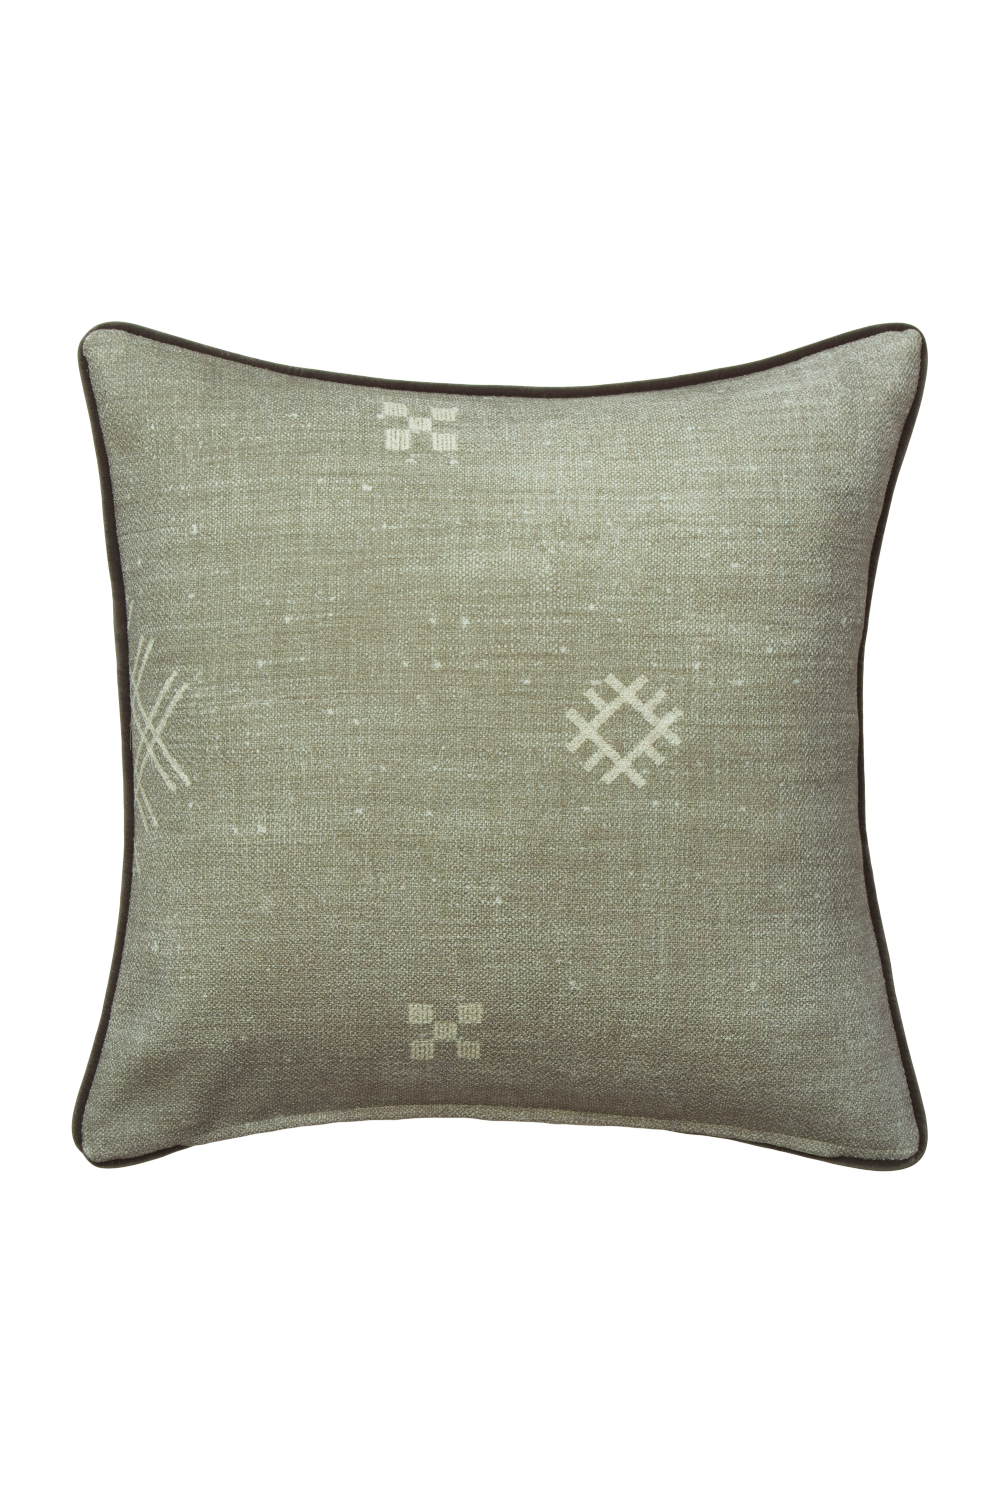 Moroccan Inspired Outdoor Cushion | Andrew Martin Azorus | Oroa.com